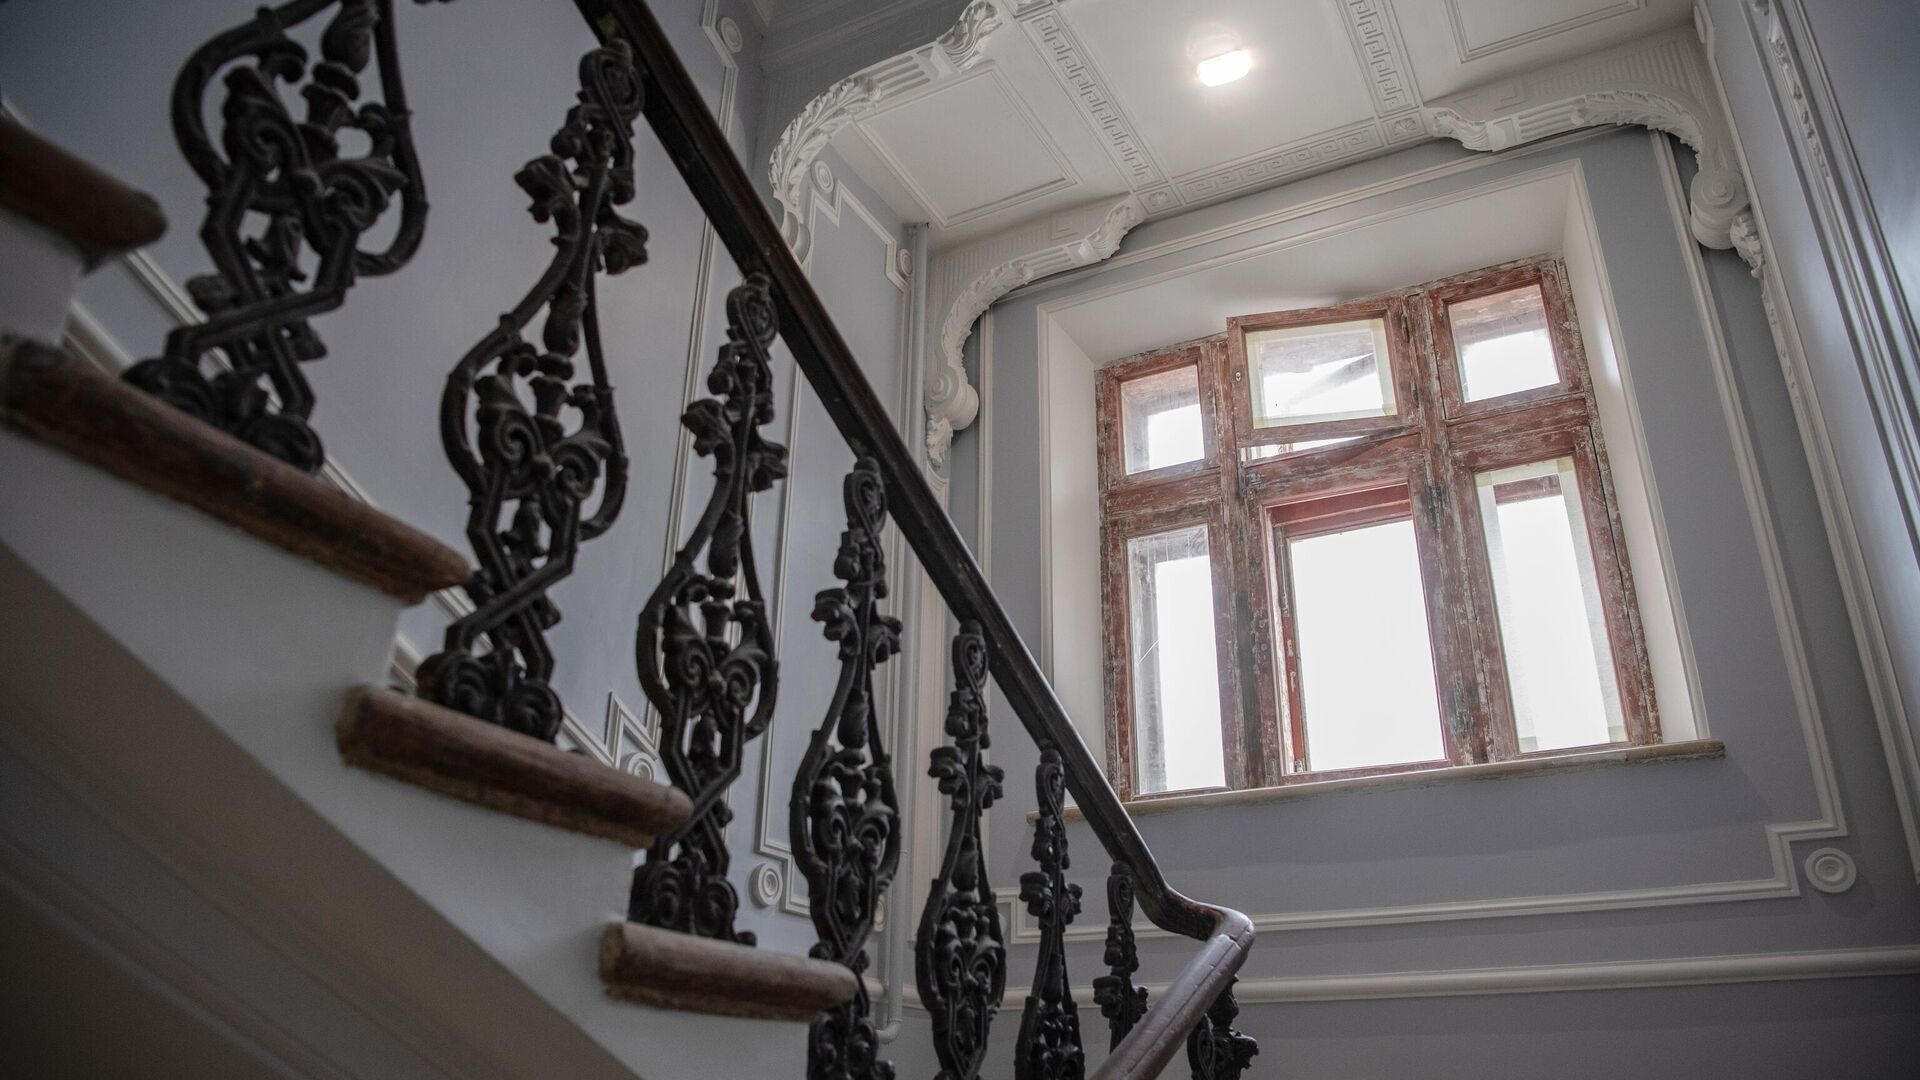 Лестница в жилом доме 1882-84 гг. постройки (архитектор П.А.Дриттенпрейс) во время ремонта - РИА Новости, 1920, 09.12.2021